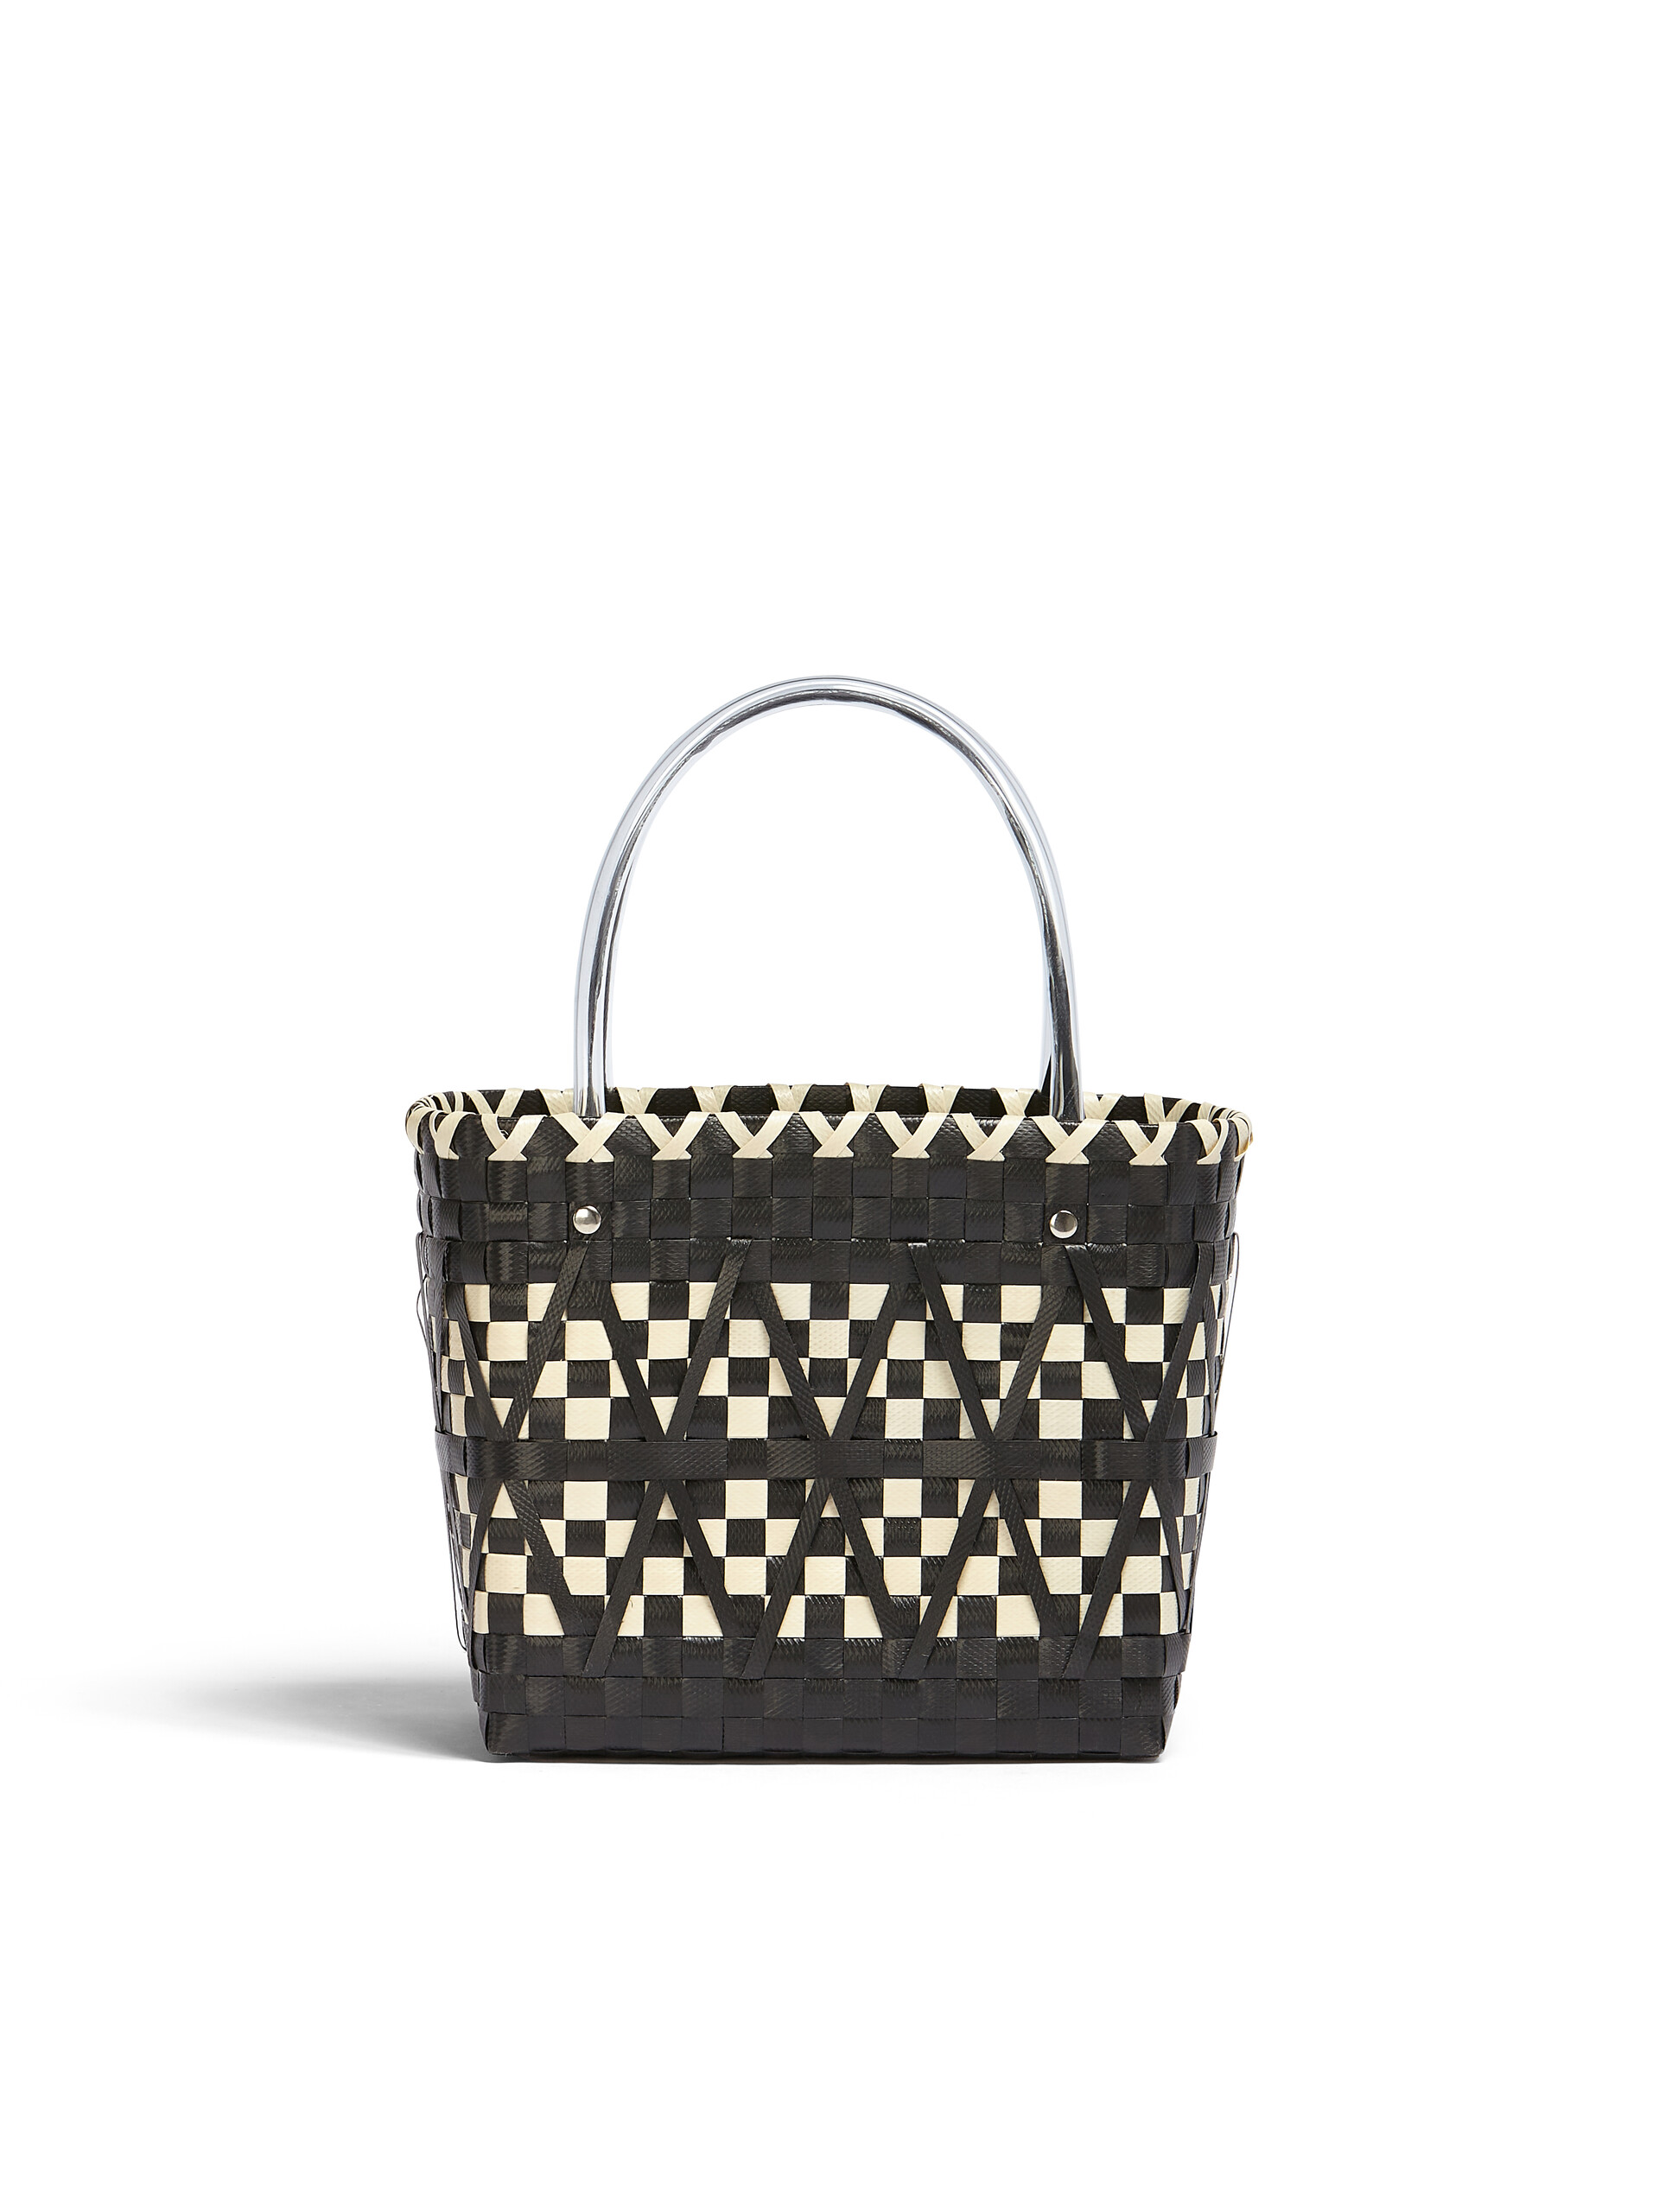 MARNI MARKET black and white shopping bag - Bags - Image 3